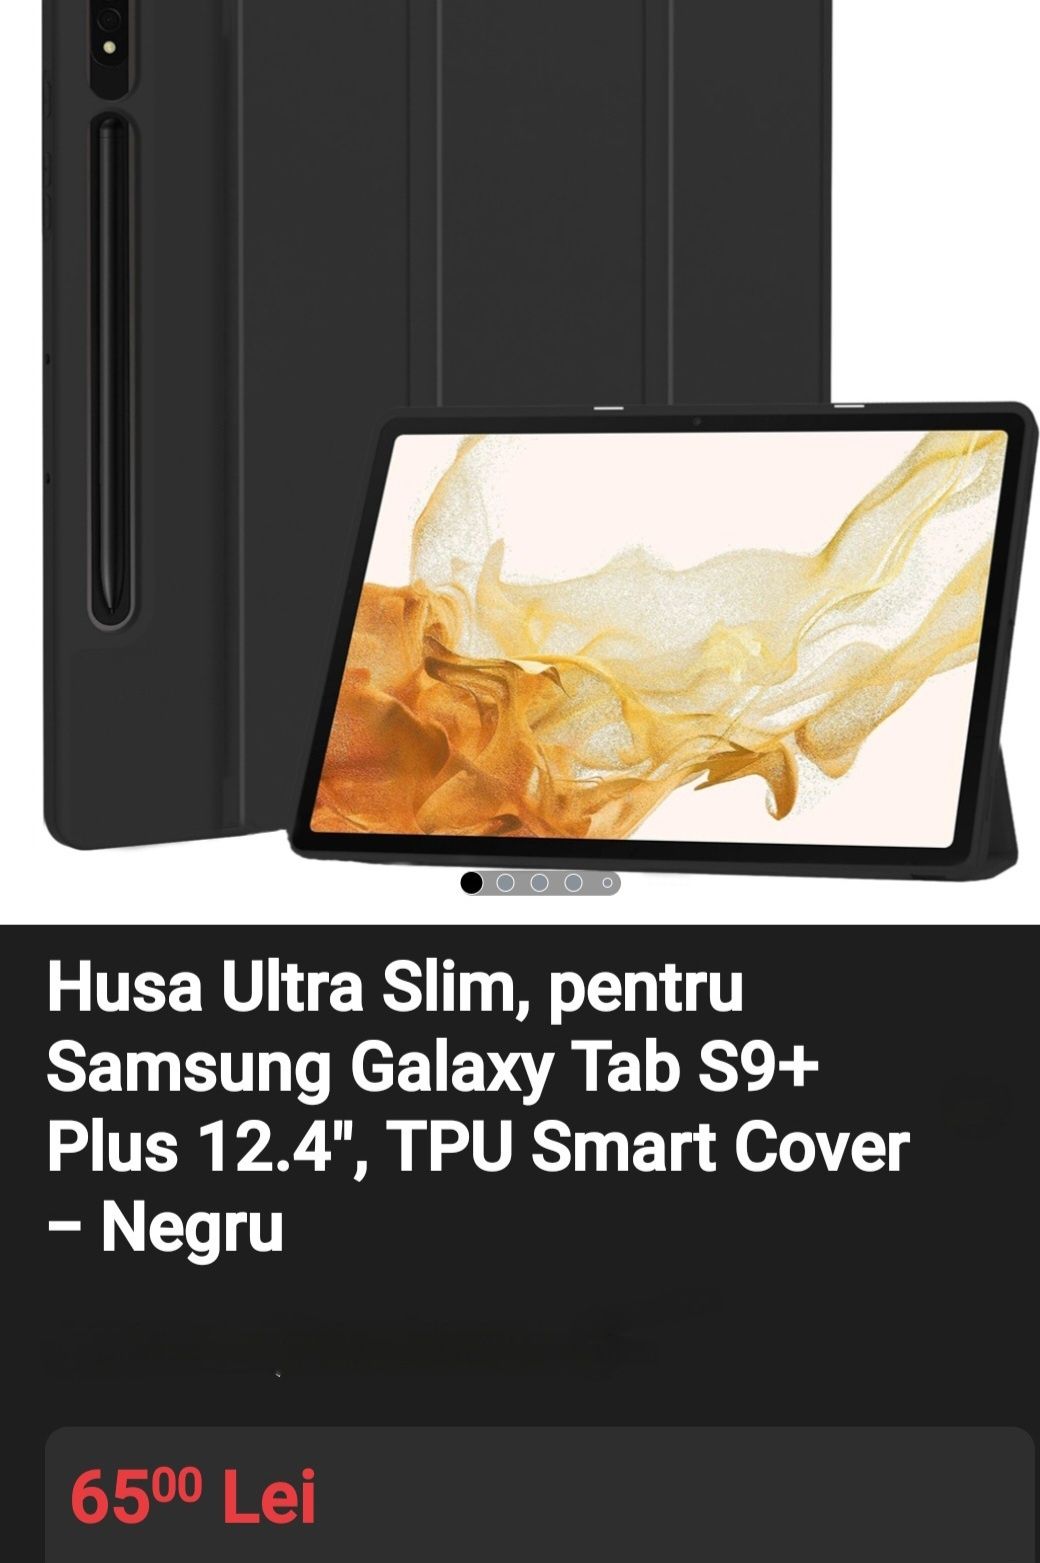 Husa si folie de sticla tableta Samsung Tab S9 plus.